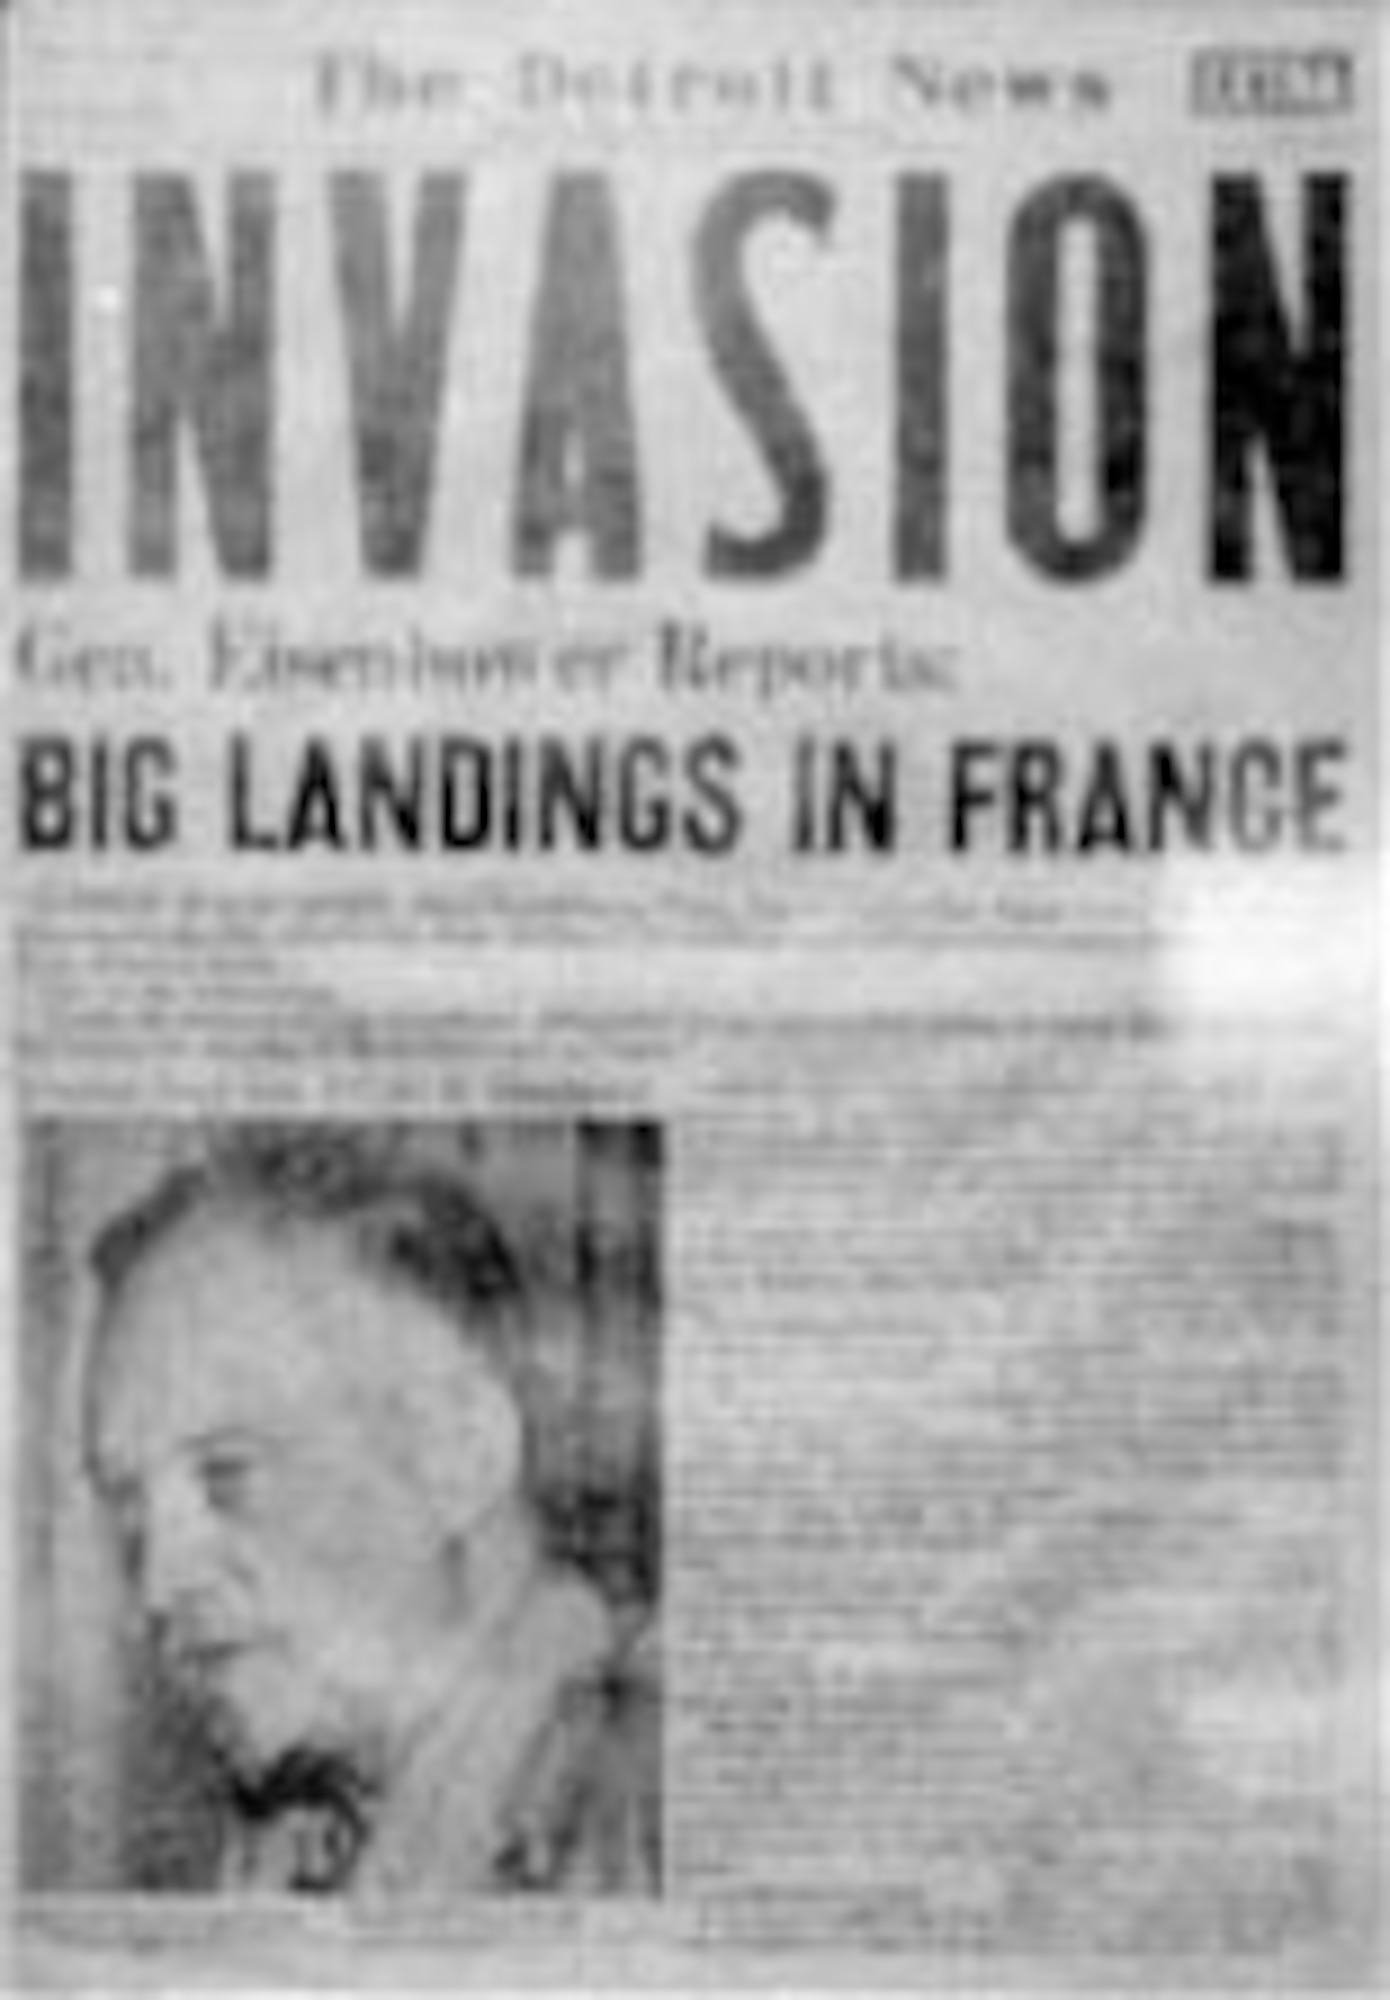 "INVASION" headline in The Detroit News. (U.S. Air Force photo)